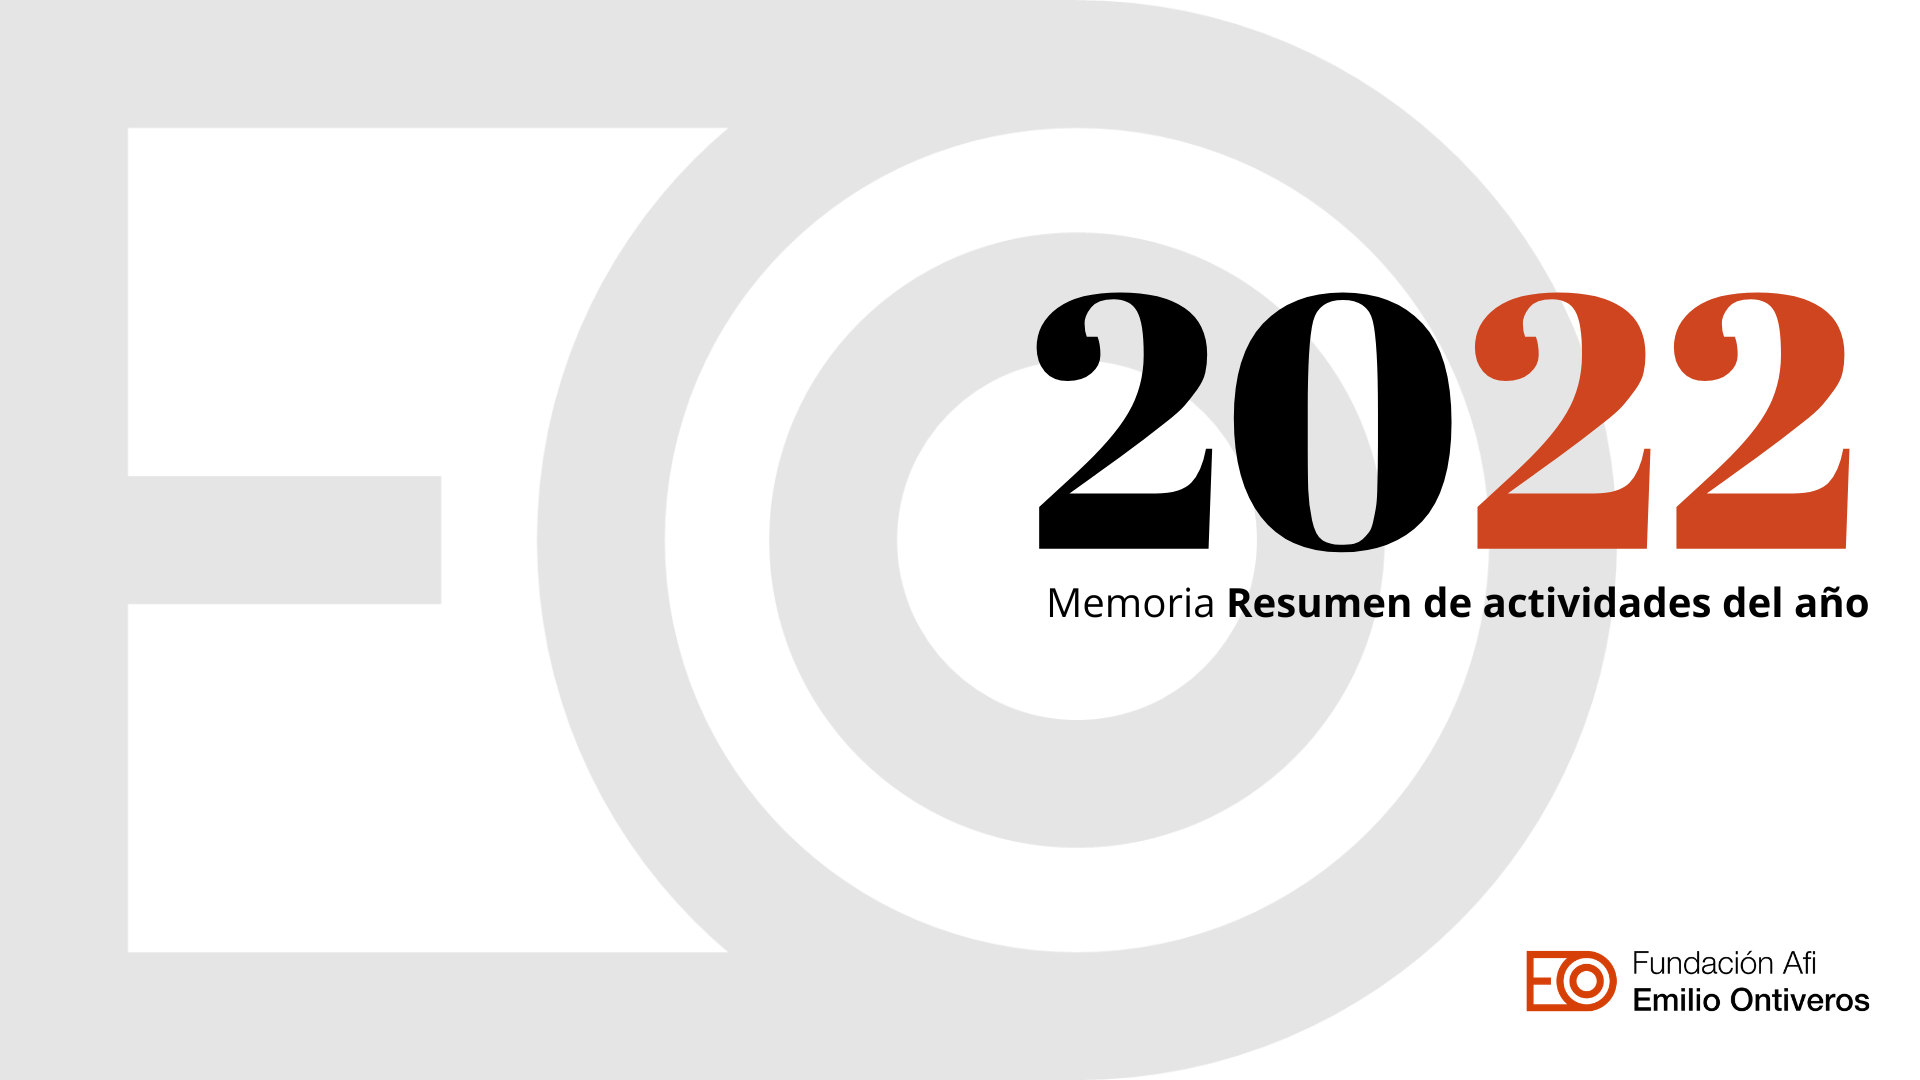 MEMORIA DE ACTIVIDADES 2022 - FUNDACIÓN AFI EMILIO ONTIVEROS